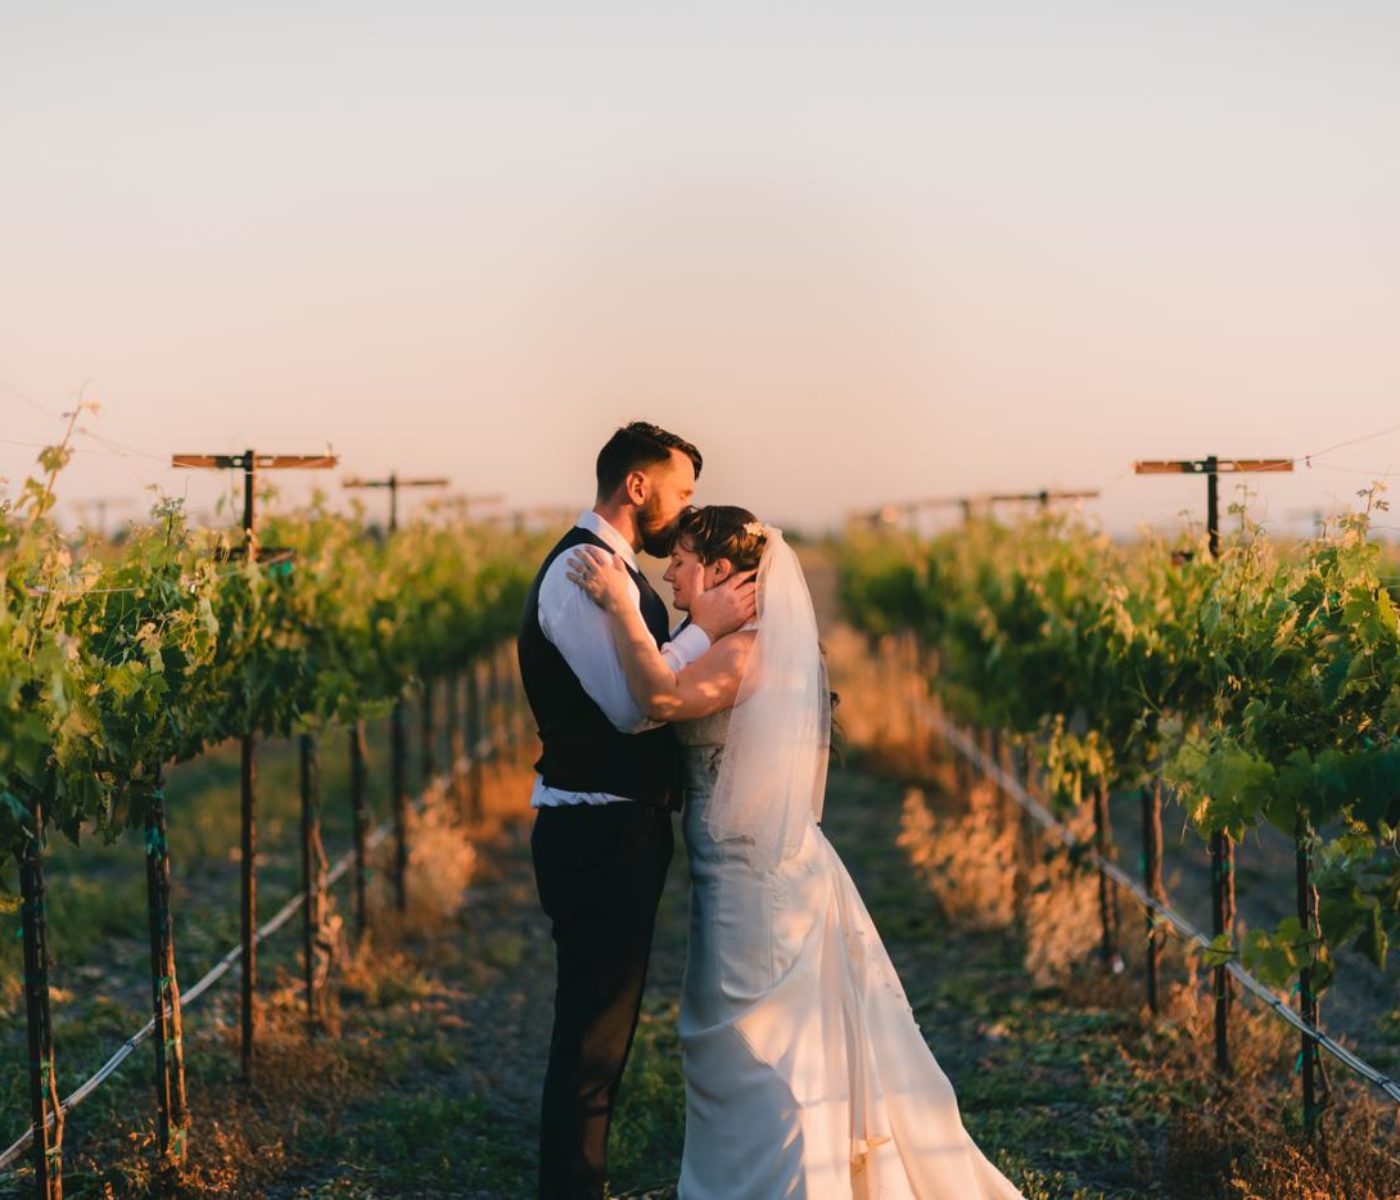 A beautiful vineyard wedding